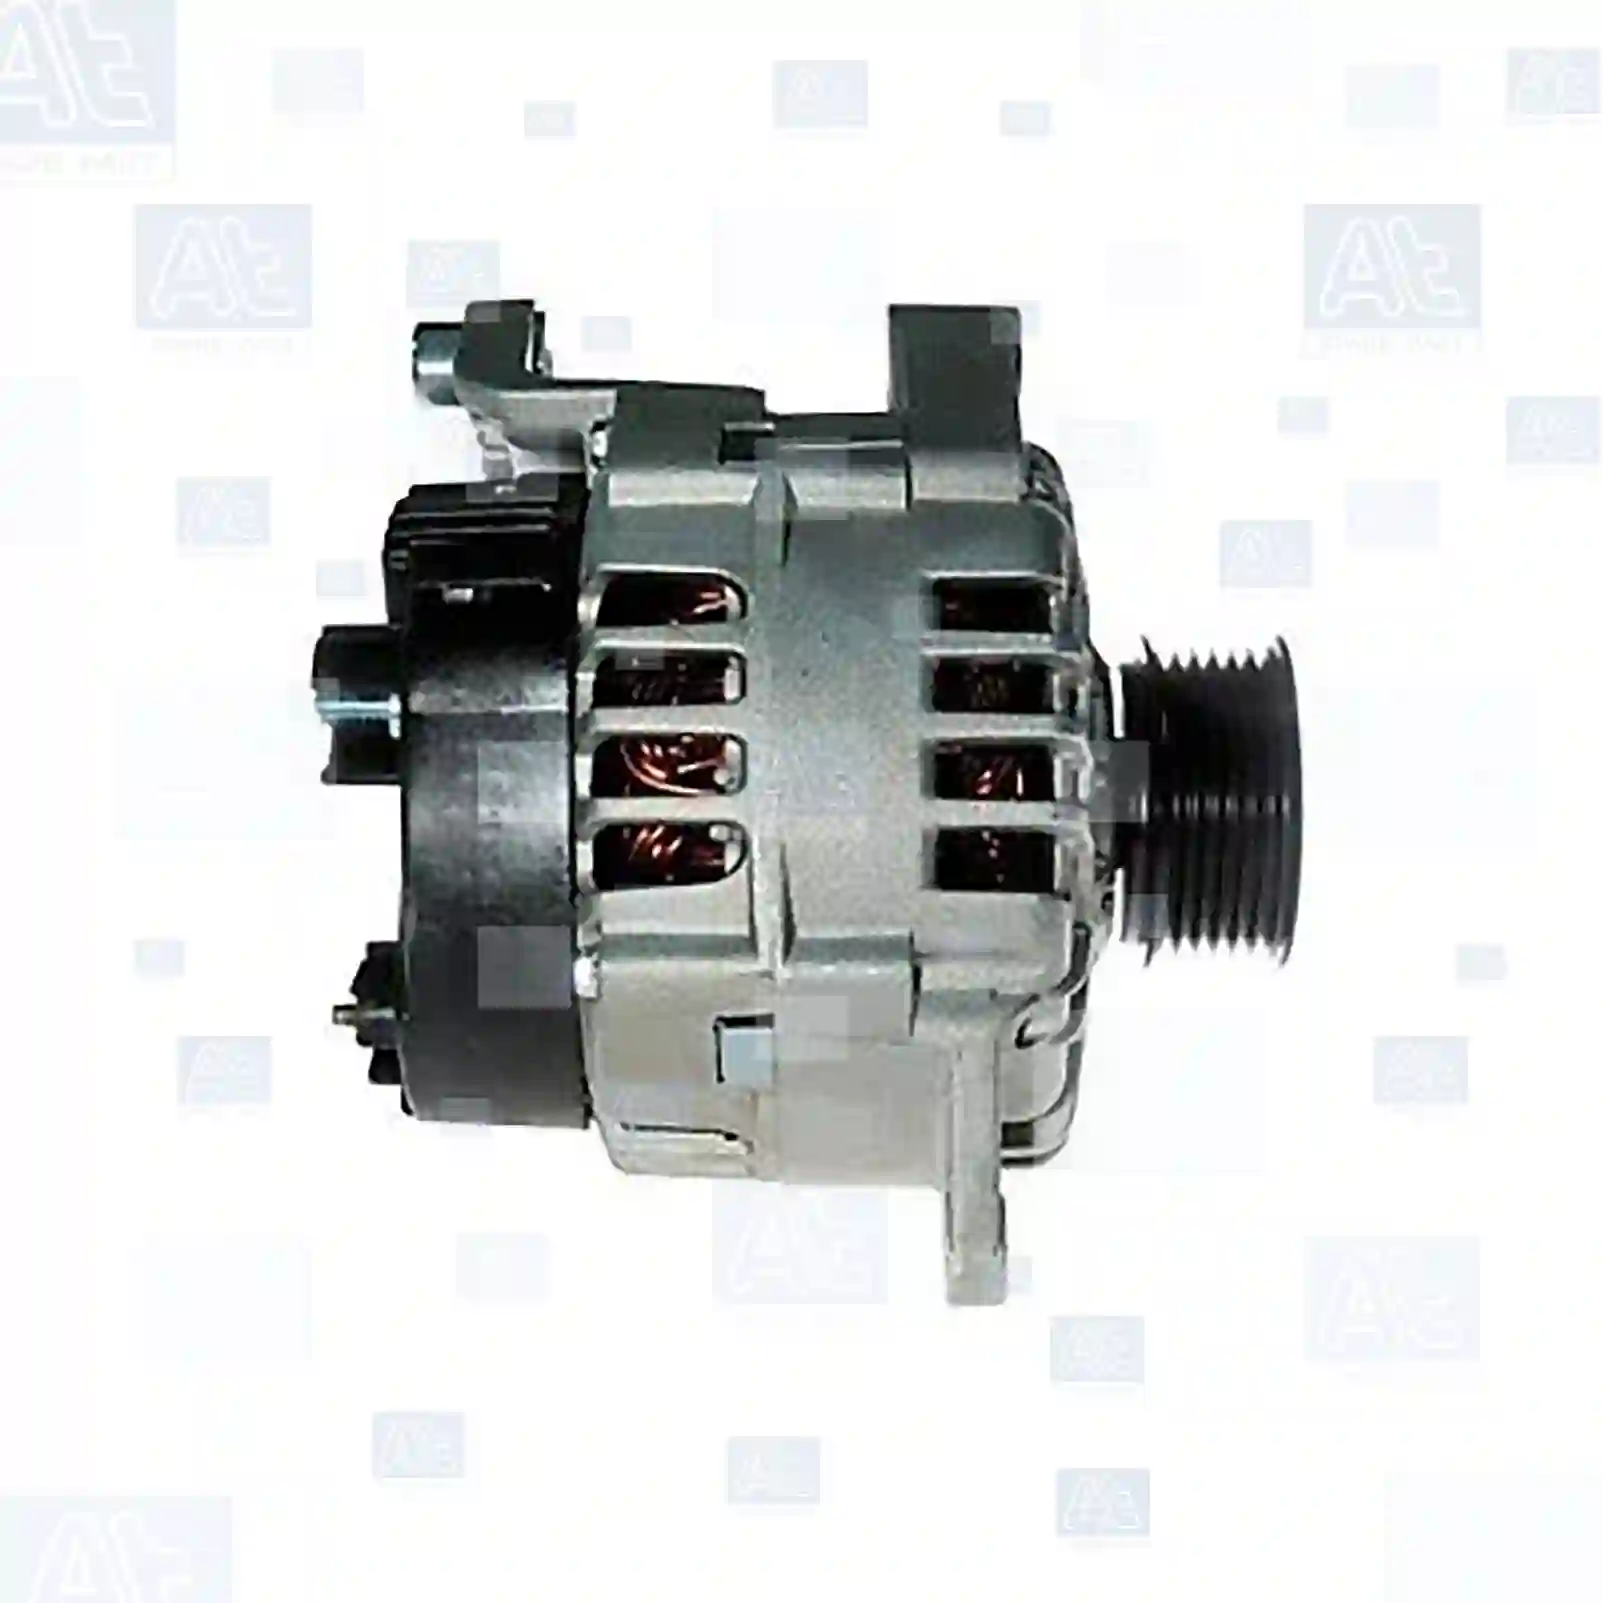 Alternator Alternator, at no: 77711562 ,  oem no:5702C0, 5702C1, 5705AF, 5705C0, 5705C1, 5705EV, 500371244, 500371244, 71723395, 500371244, 5702C0, 5702C1, 5705AF, 5705C0, 5705C1, 5705EV At Spare Part | Engine, Accelerator Pedal, Camshaft, Connecting Rod, Crankcase, Crankshaft, Cylinder Head, Engine Suspension Mountings, Exhaust Manifold, Exhaust Gas Recirculation, Filter Kits, Flywheel Housing, General Overhaul Kits, Engine, Intake Manifold, Oil Cleaner, Oil Cooler, Oil Filter, Oil Pump, Oil Sump, Piston & Liner, Sensor & Switch, Timing Case, Turbocharger, Cooling System, Belt Tensioner, Coolant Filter, Coolant Pipe, Corrosion Prevention Agent, Drive, Expansion Tank, Fan, Intercooler, Monitors & Gauges, Radiator, Thermostat, V-Belt / Timing belt, Water Pump, Fuel System, Electronical Injector Unit, Feed Pump, Fuel Filter, cpl., Fuel Gauge Sender,  Fuel Line, Fuel Pump, Fuel Tank, Injection Line Kit, Injection Pump, Exhaust System, Clutch & Pedal, Gearbox, Propeller Shaft, Axles, Brake System, Hubs & Wheels, Suspension, Leaf Spring, Universal Parts / Accessories, Steering, Electrical System, Cabin